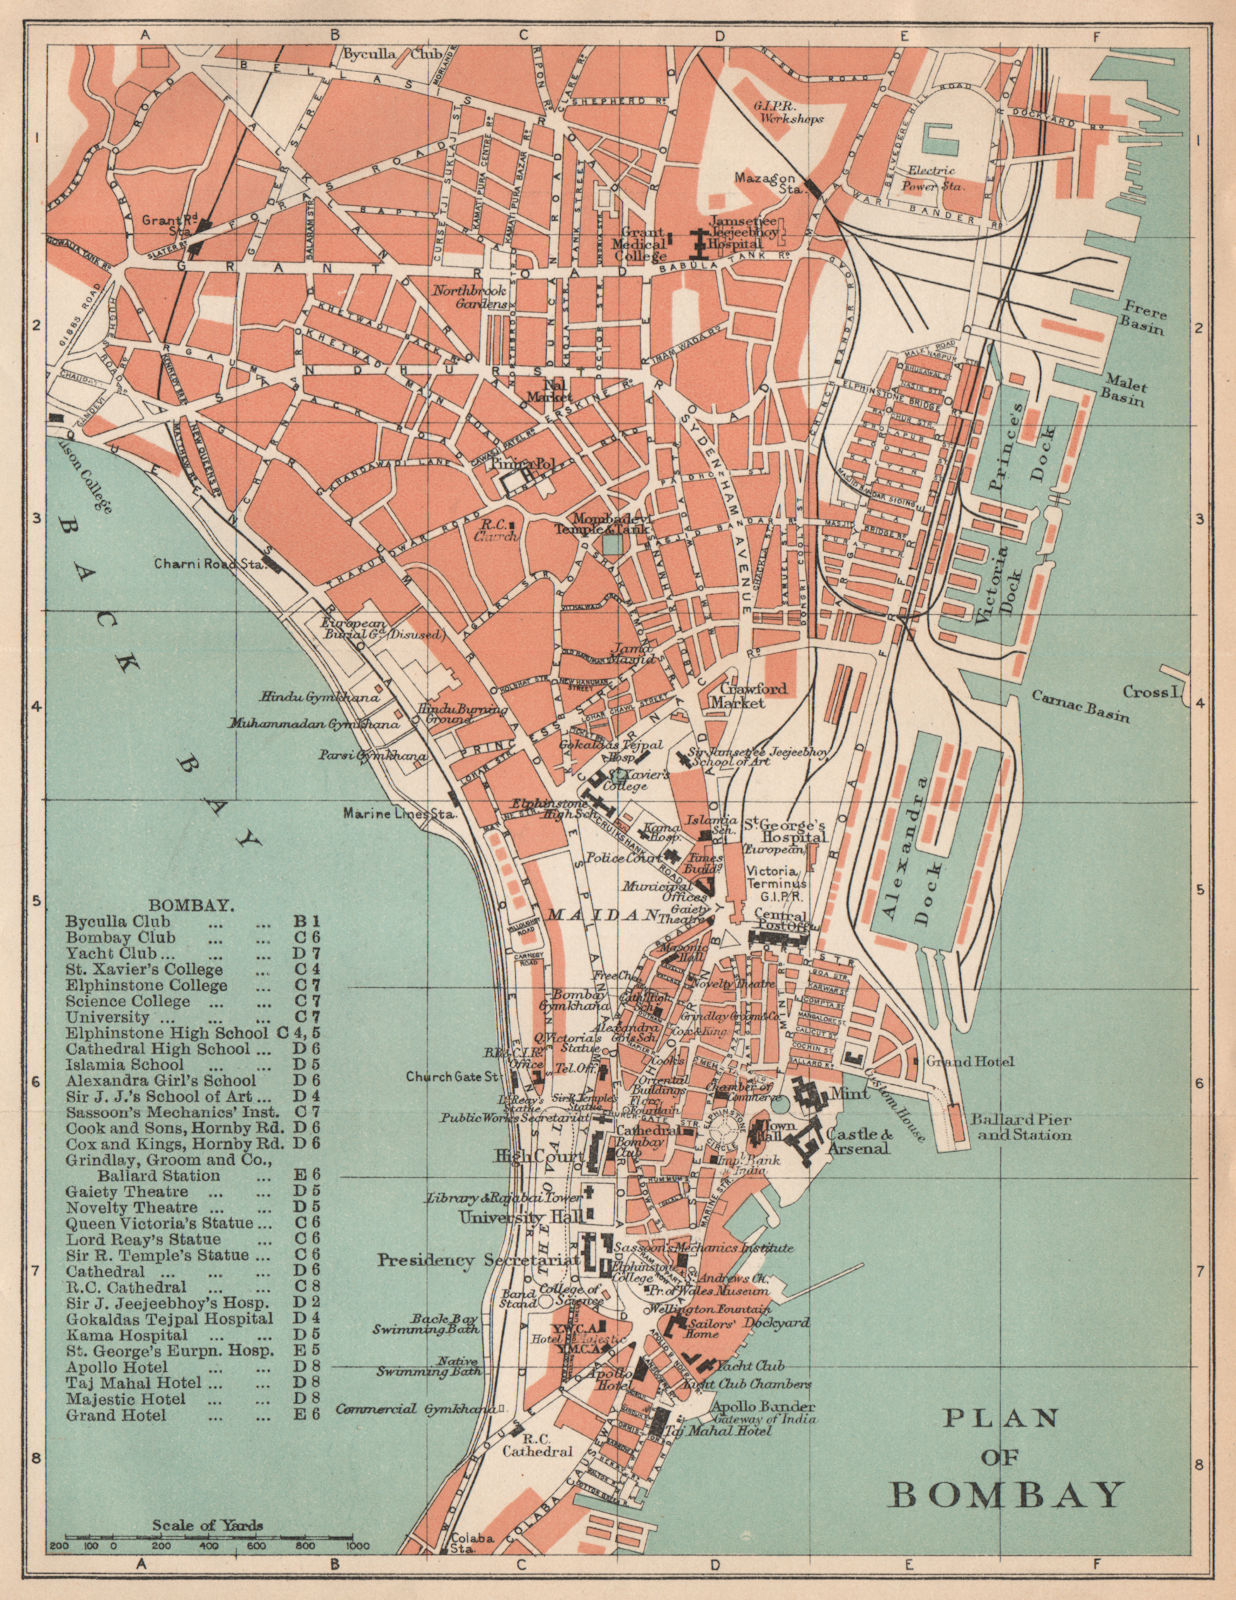 Associate Product INDIA. Bombay (Mumbai) plan. Clubs schools hospitals theatres hotels 1929 map